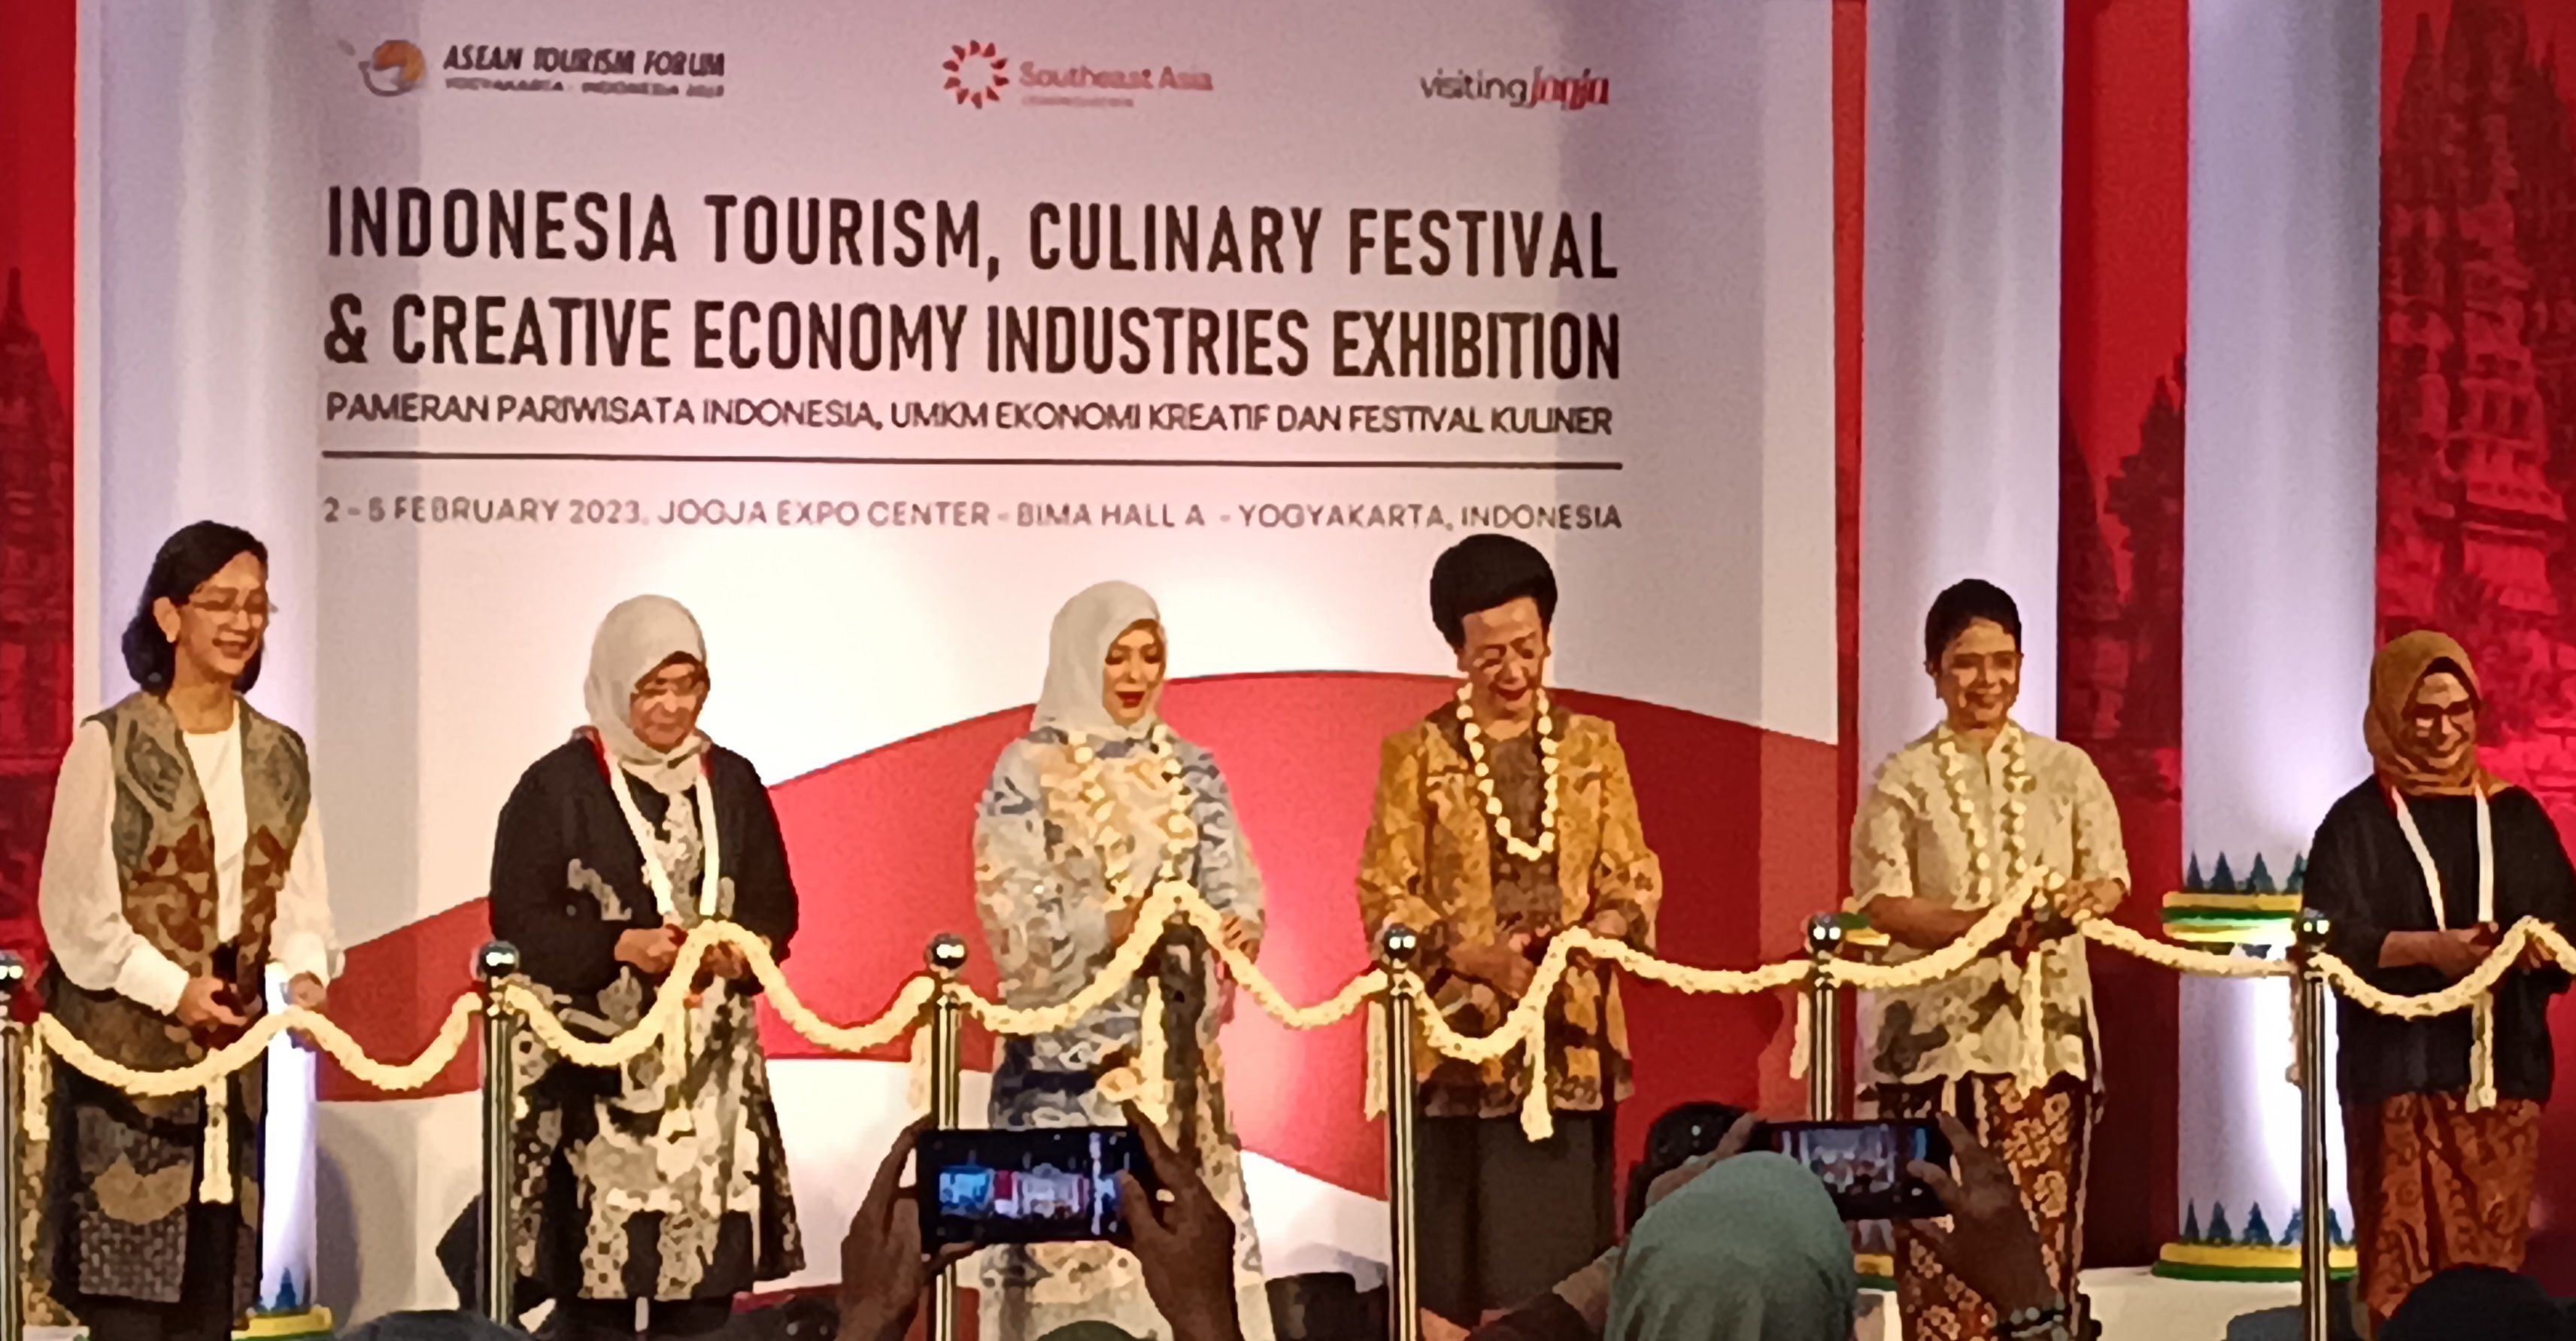 asean tourism forum (atf) 2023